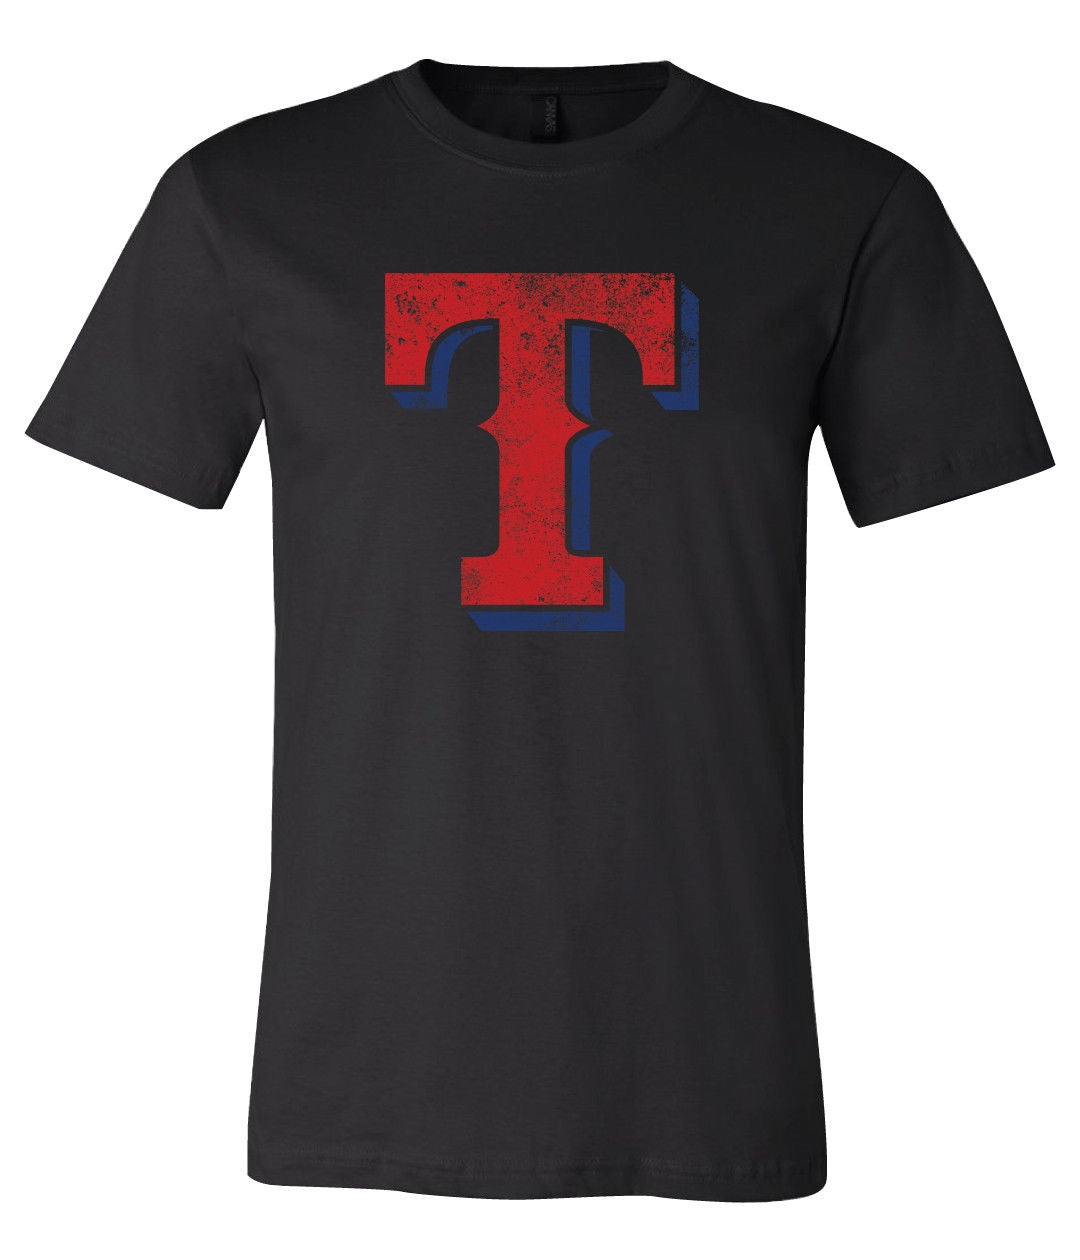 Texas Rangers Text logo Distressed Vintage logo T-shirt 6 Sizes S-3XL!!